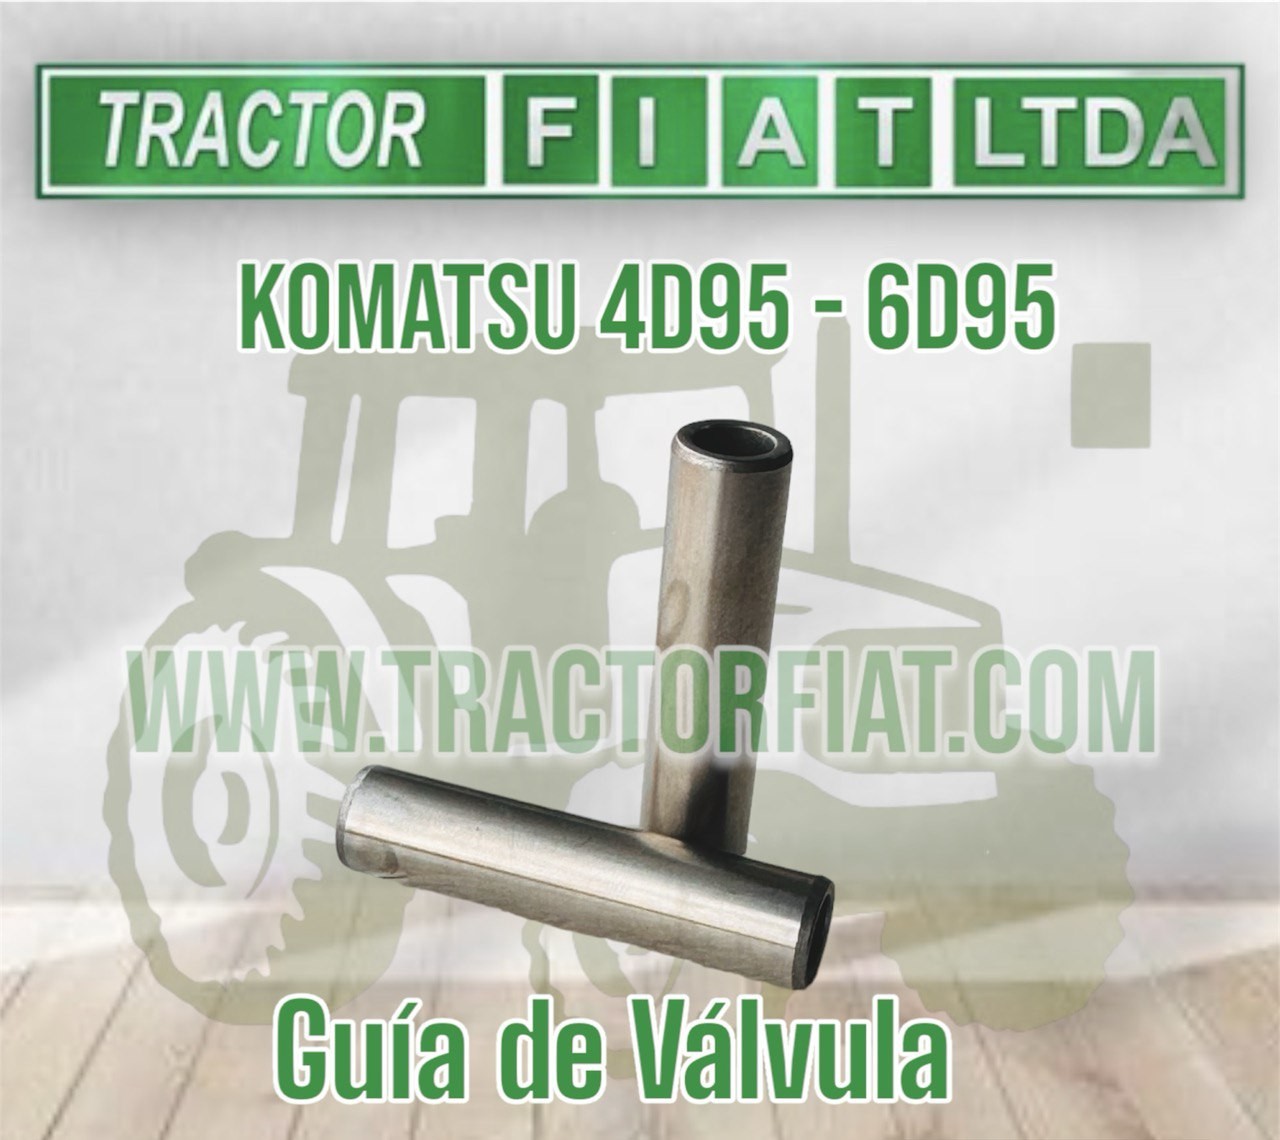 GUIAS DE VALVULA  - MOTOR KOMATSU 6D95/4D95